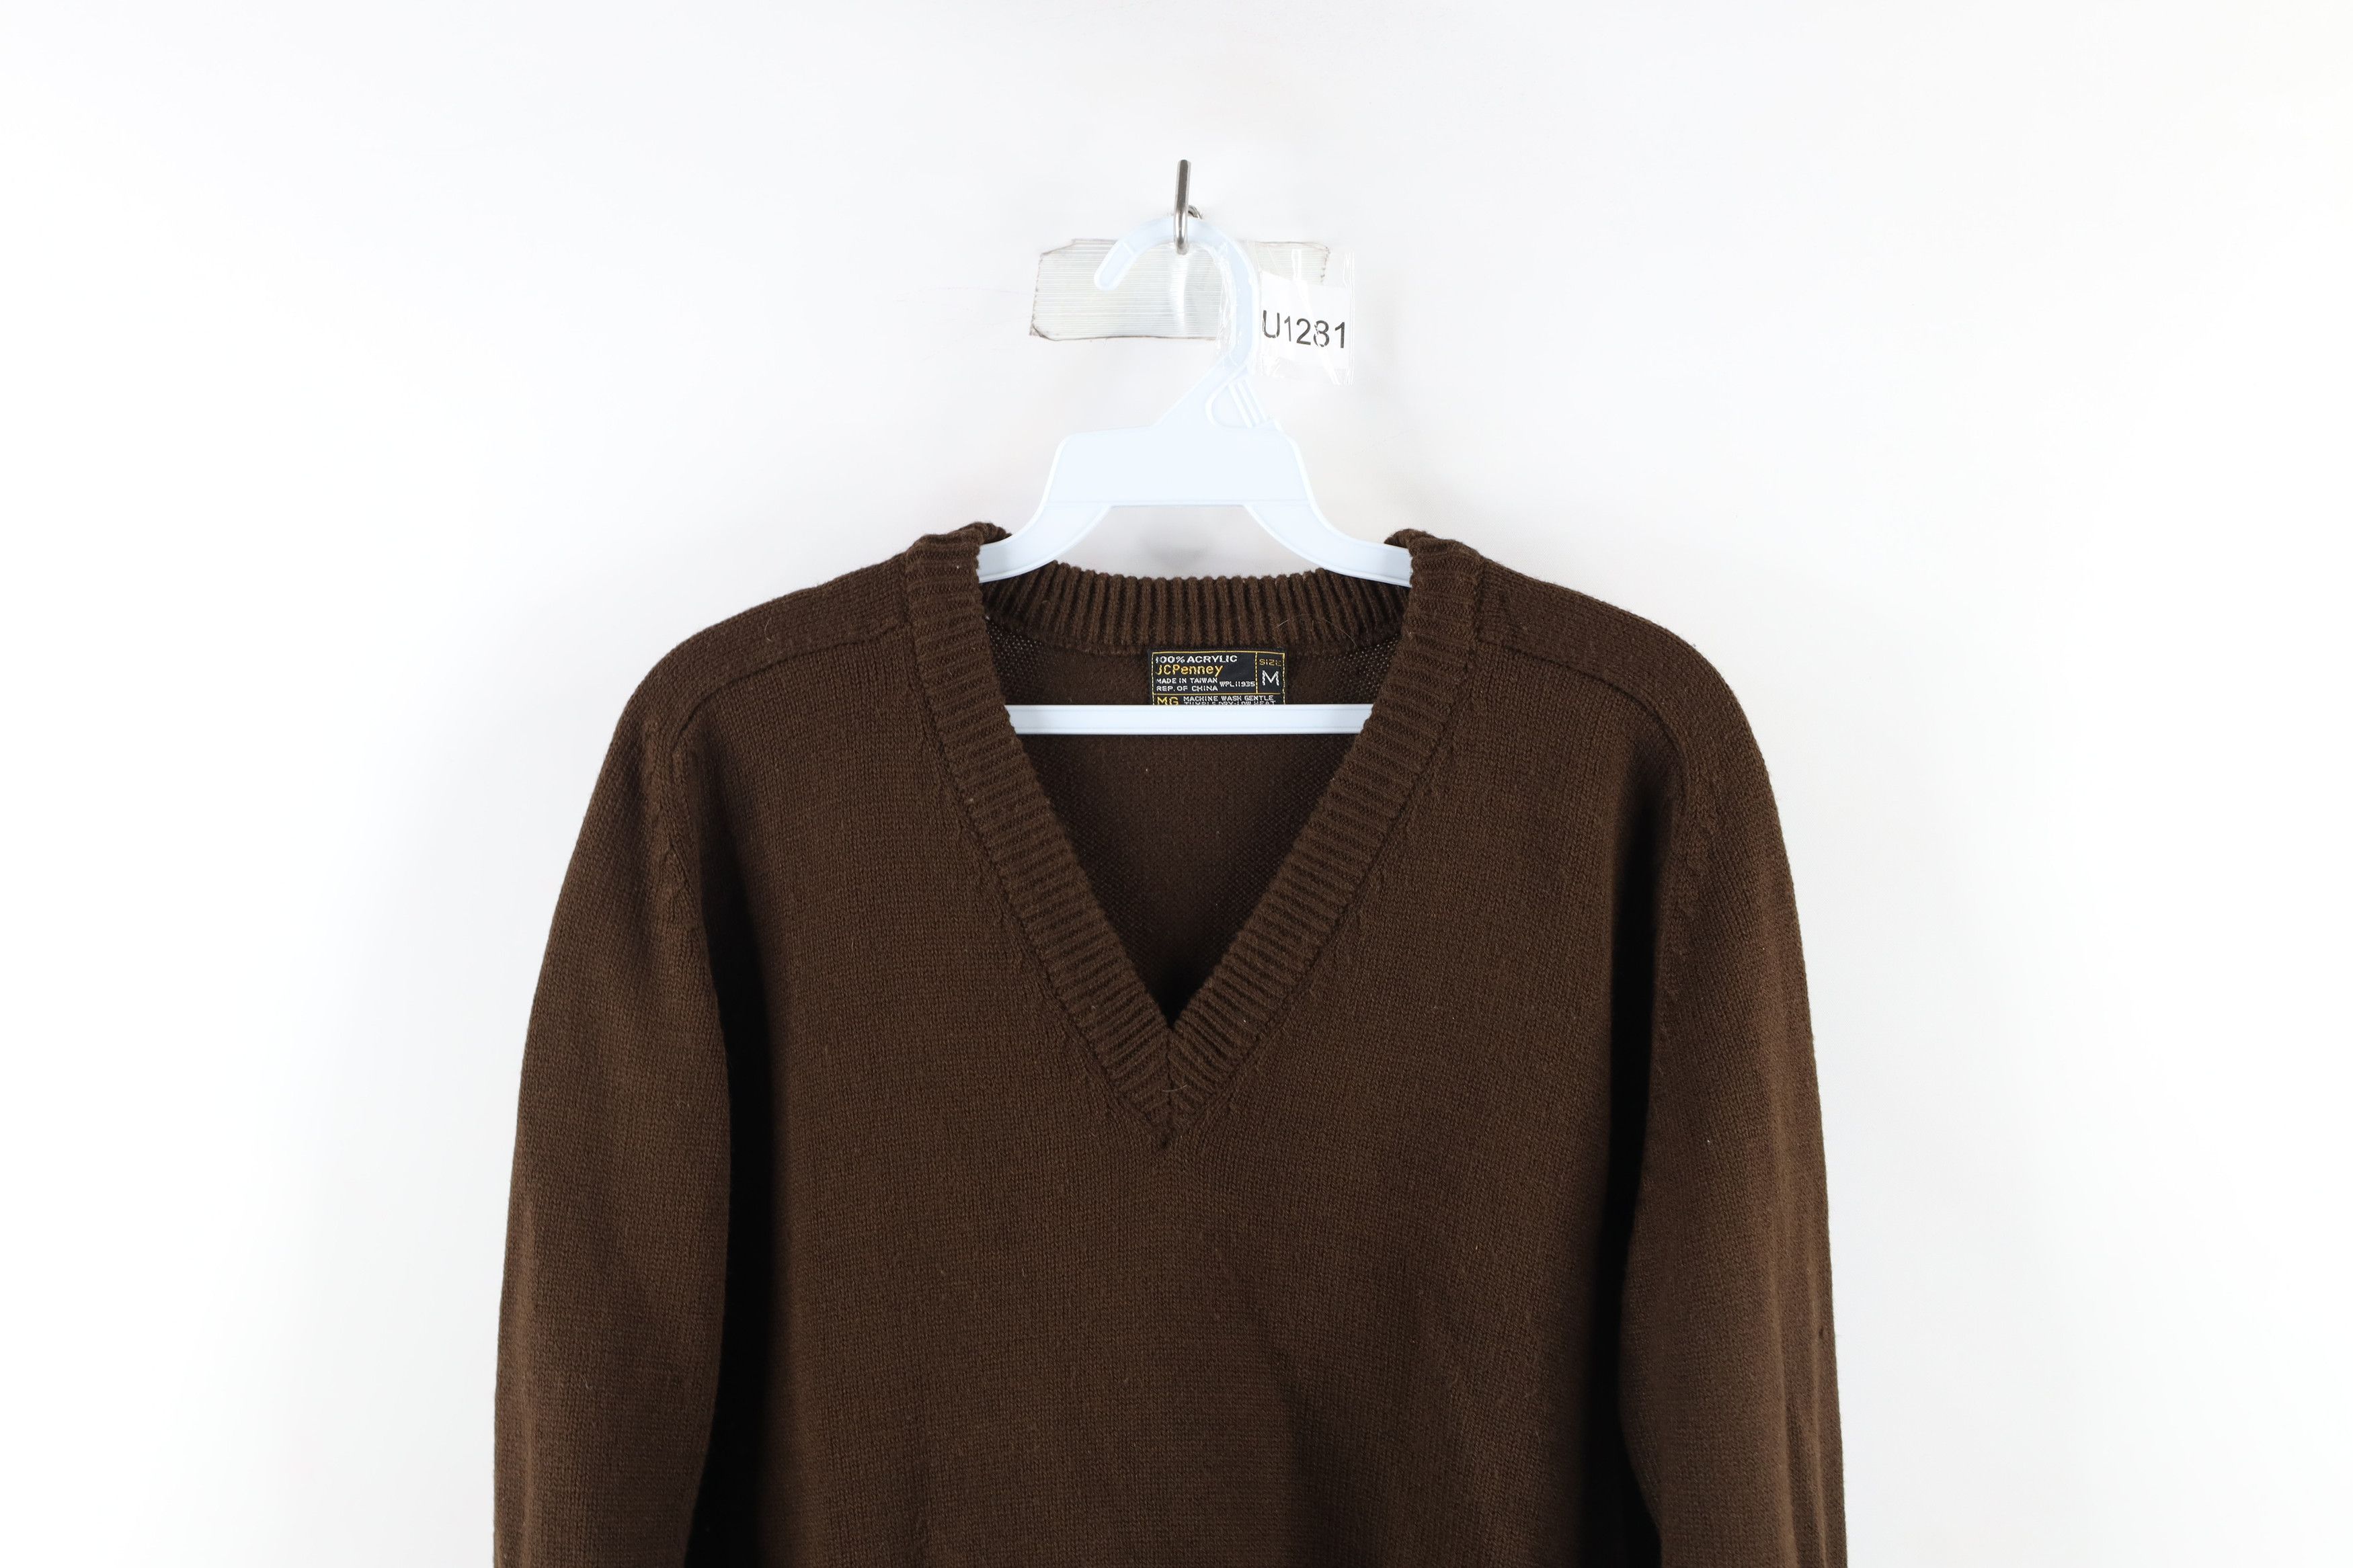 Vintage Vintage 70s Streetwear Blank Knit V-Neck Sweater Brown Size M / US 6-8 / IT 42-44 - 2 Preview